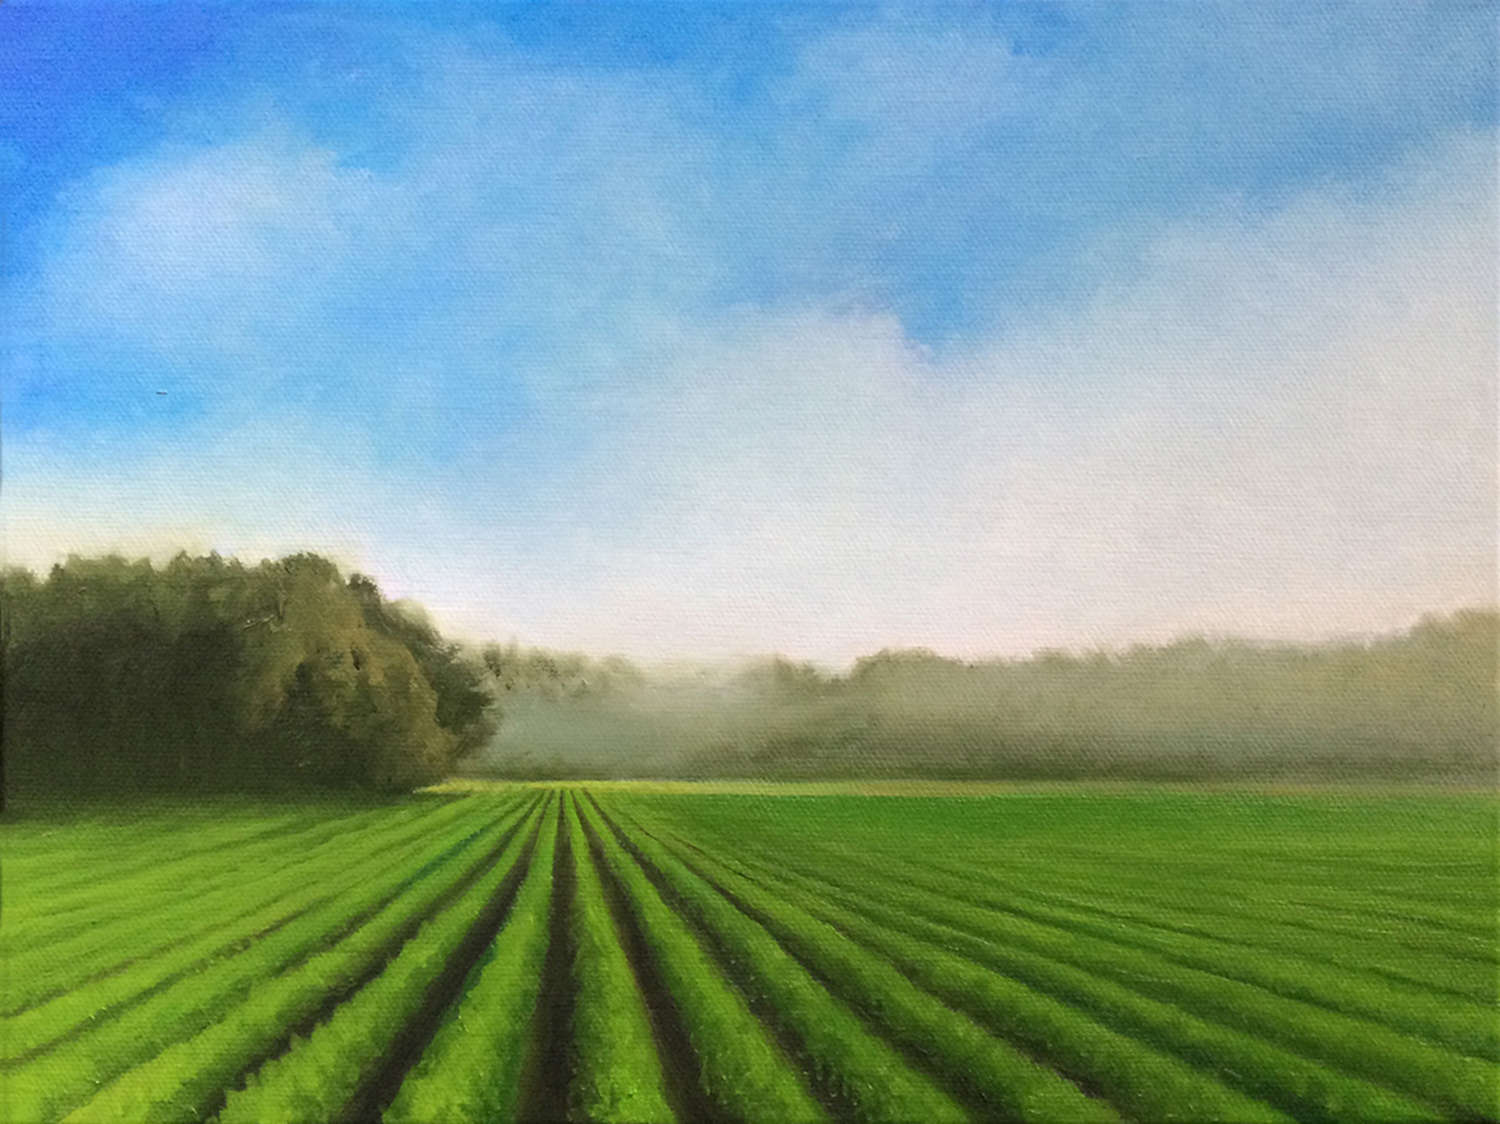 Summer Fields by David Davenport 9X12 oil onc anvas at Craven Allen Gallery  840